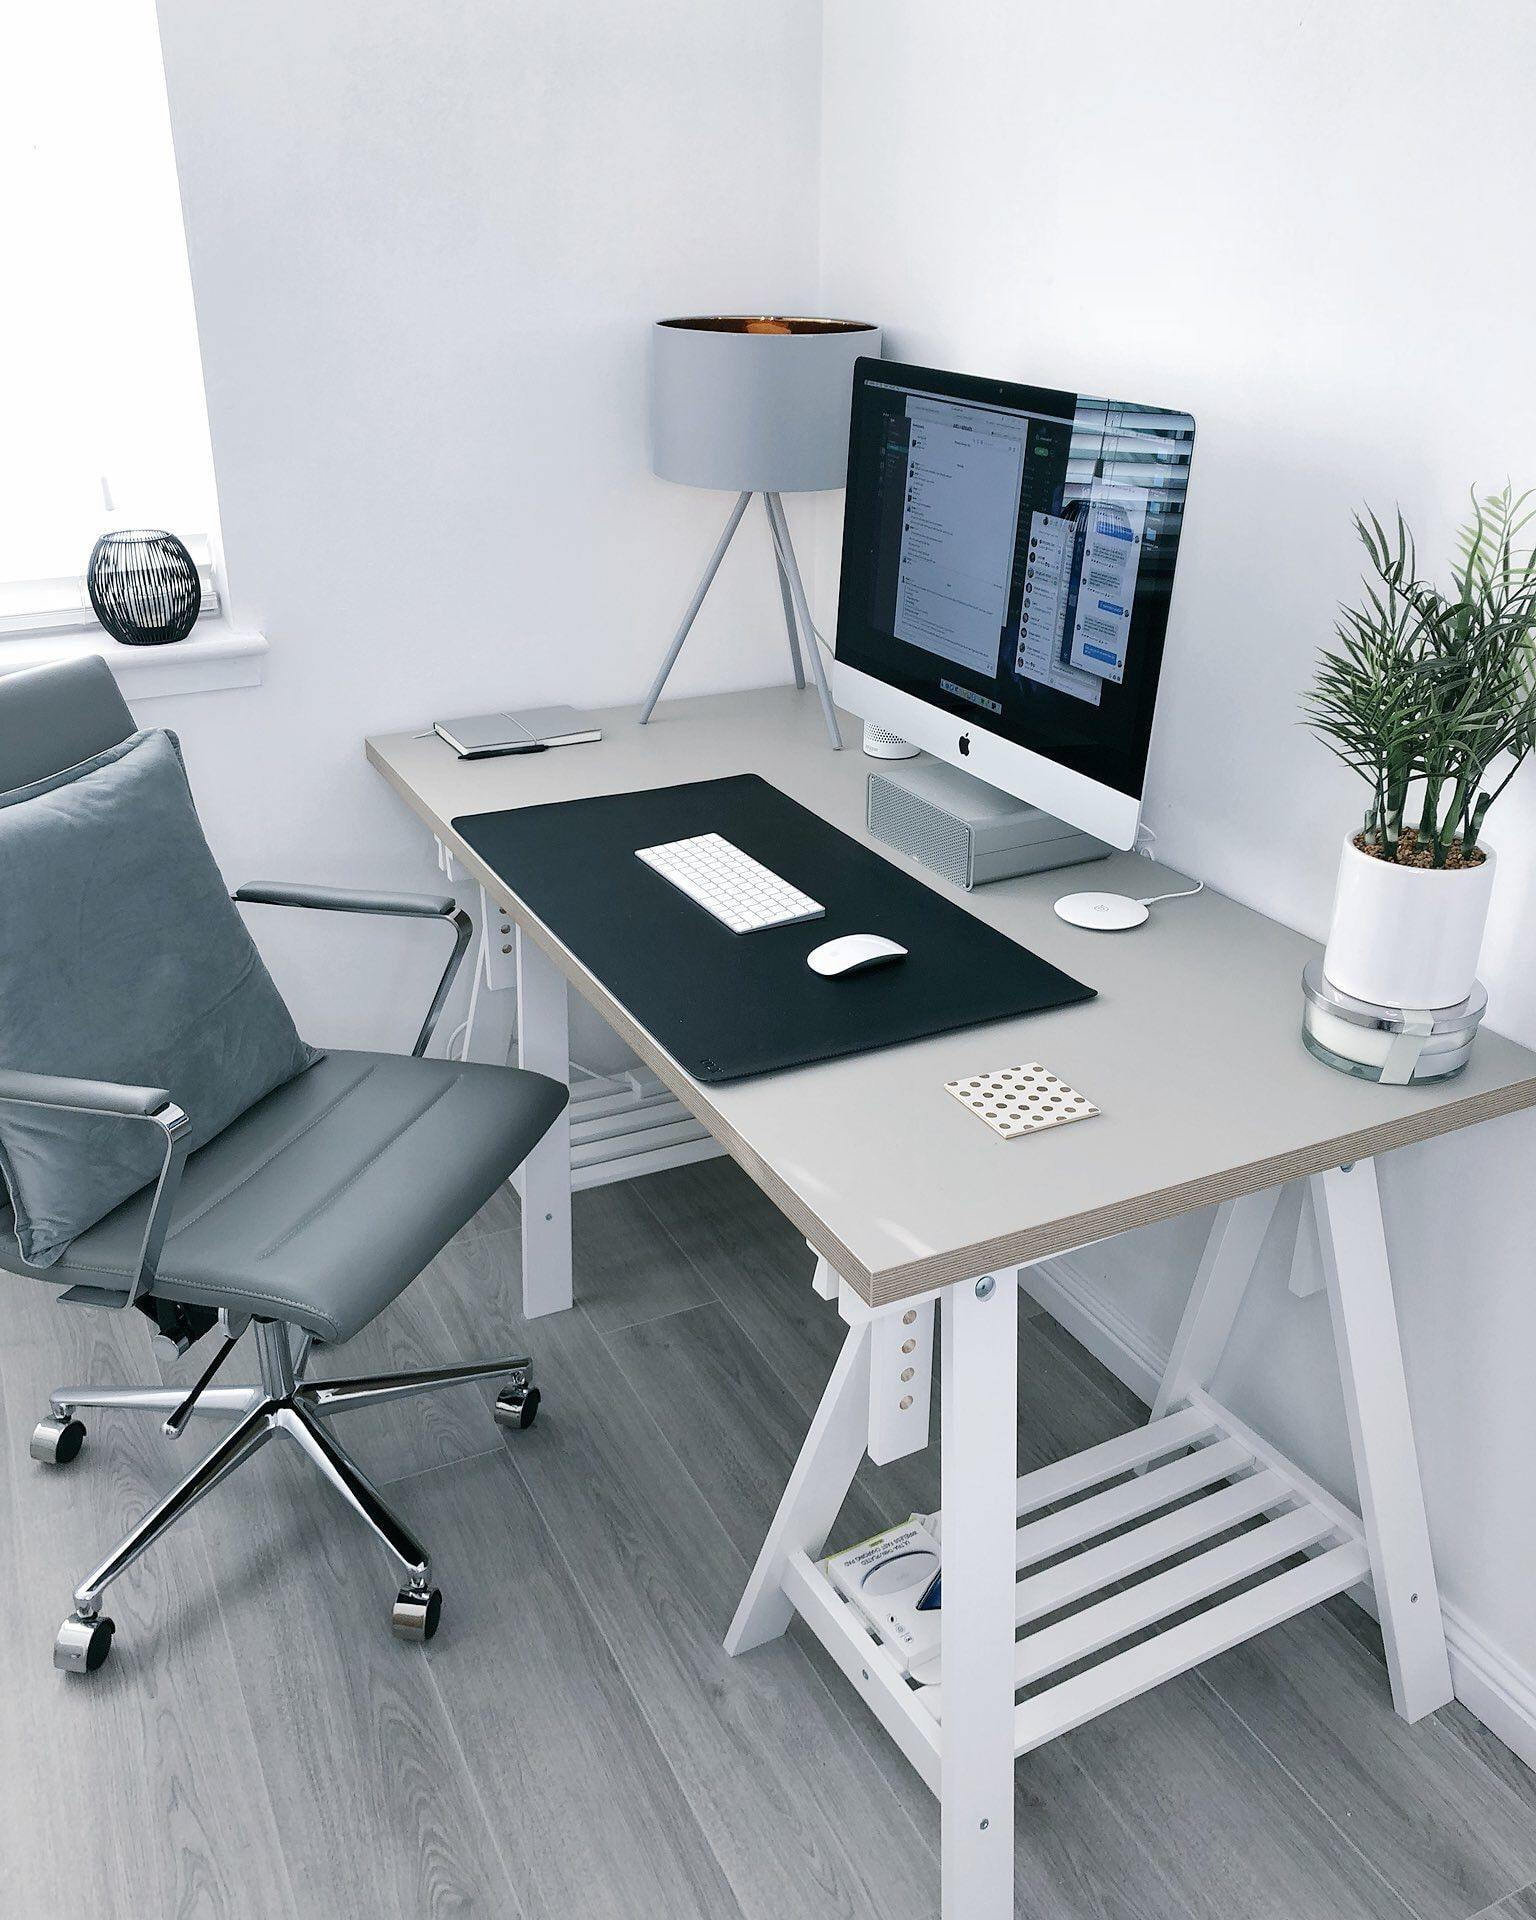 ergonomic chair in small room - minimalist desk setup ideas